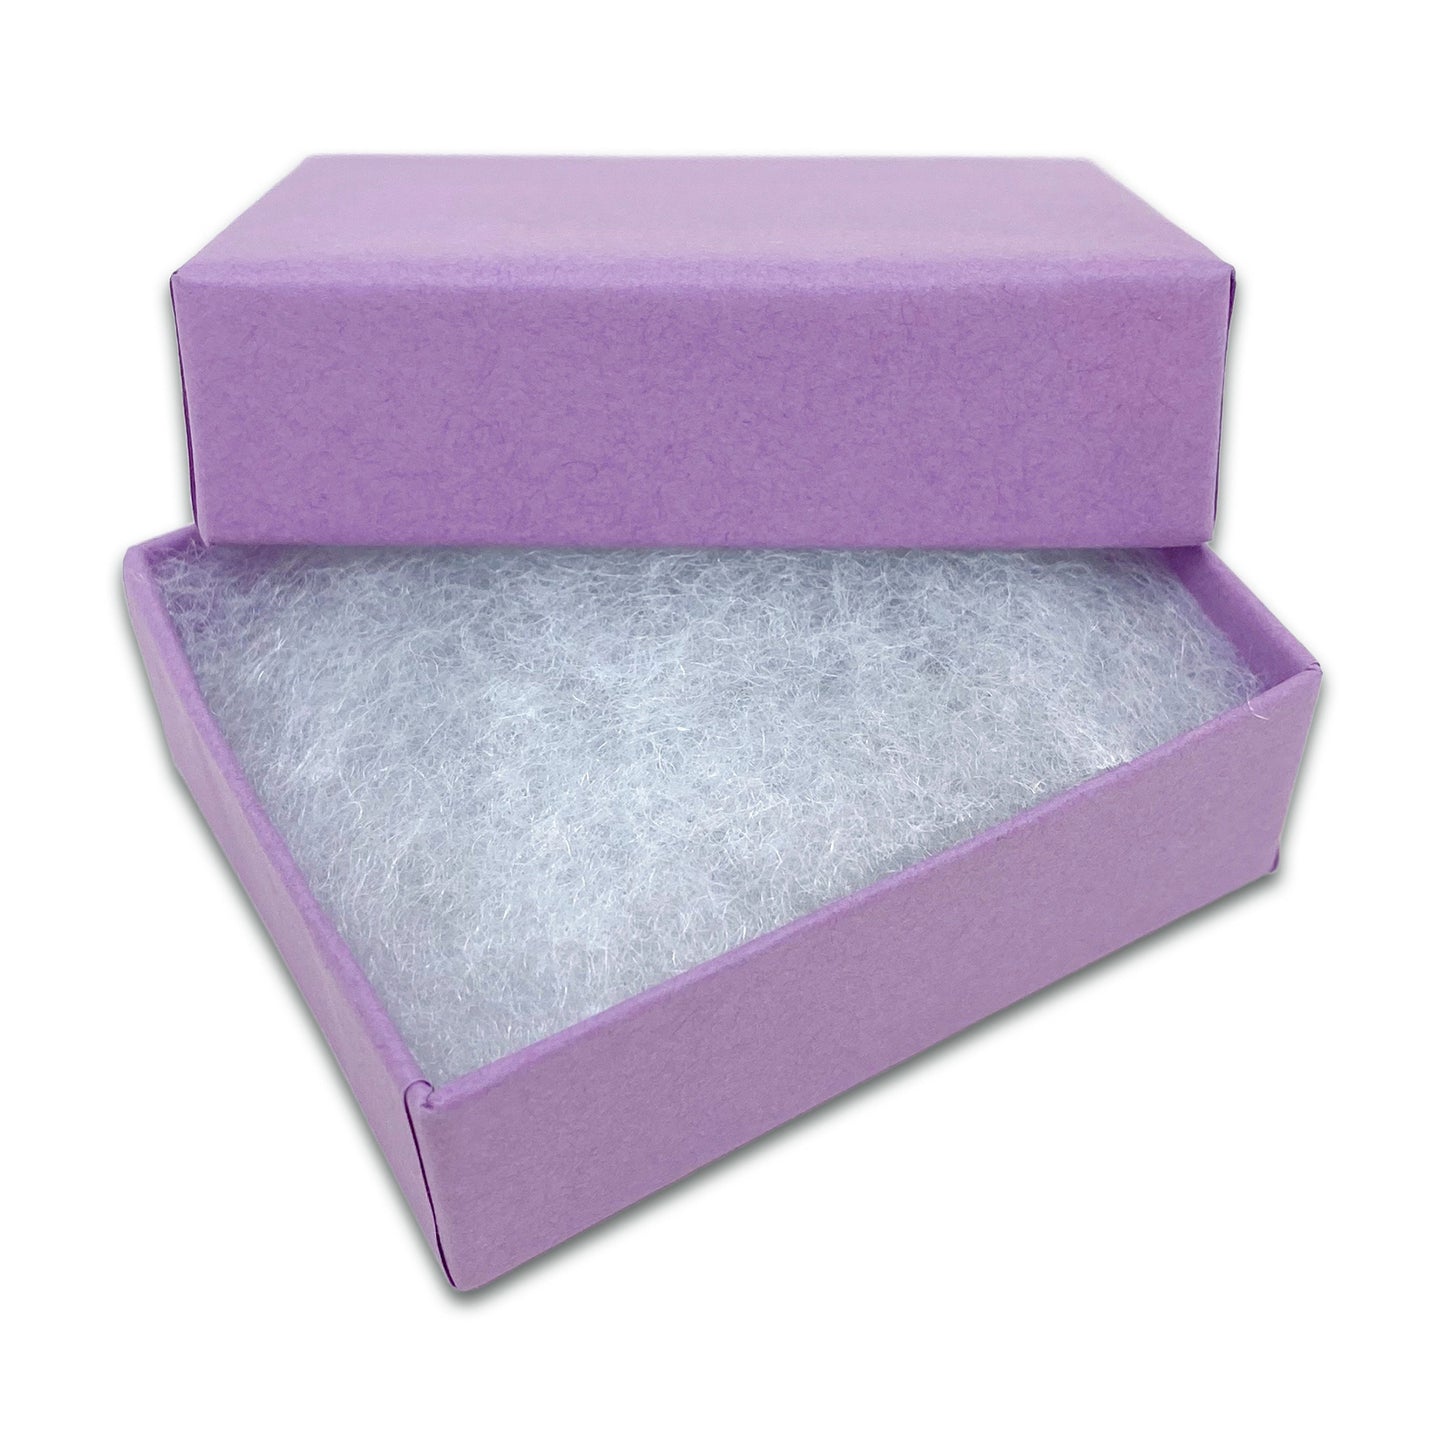 1 15/16" x 1 1/4" x 11/16" Matte Purple Cotton Filled Paper Box